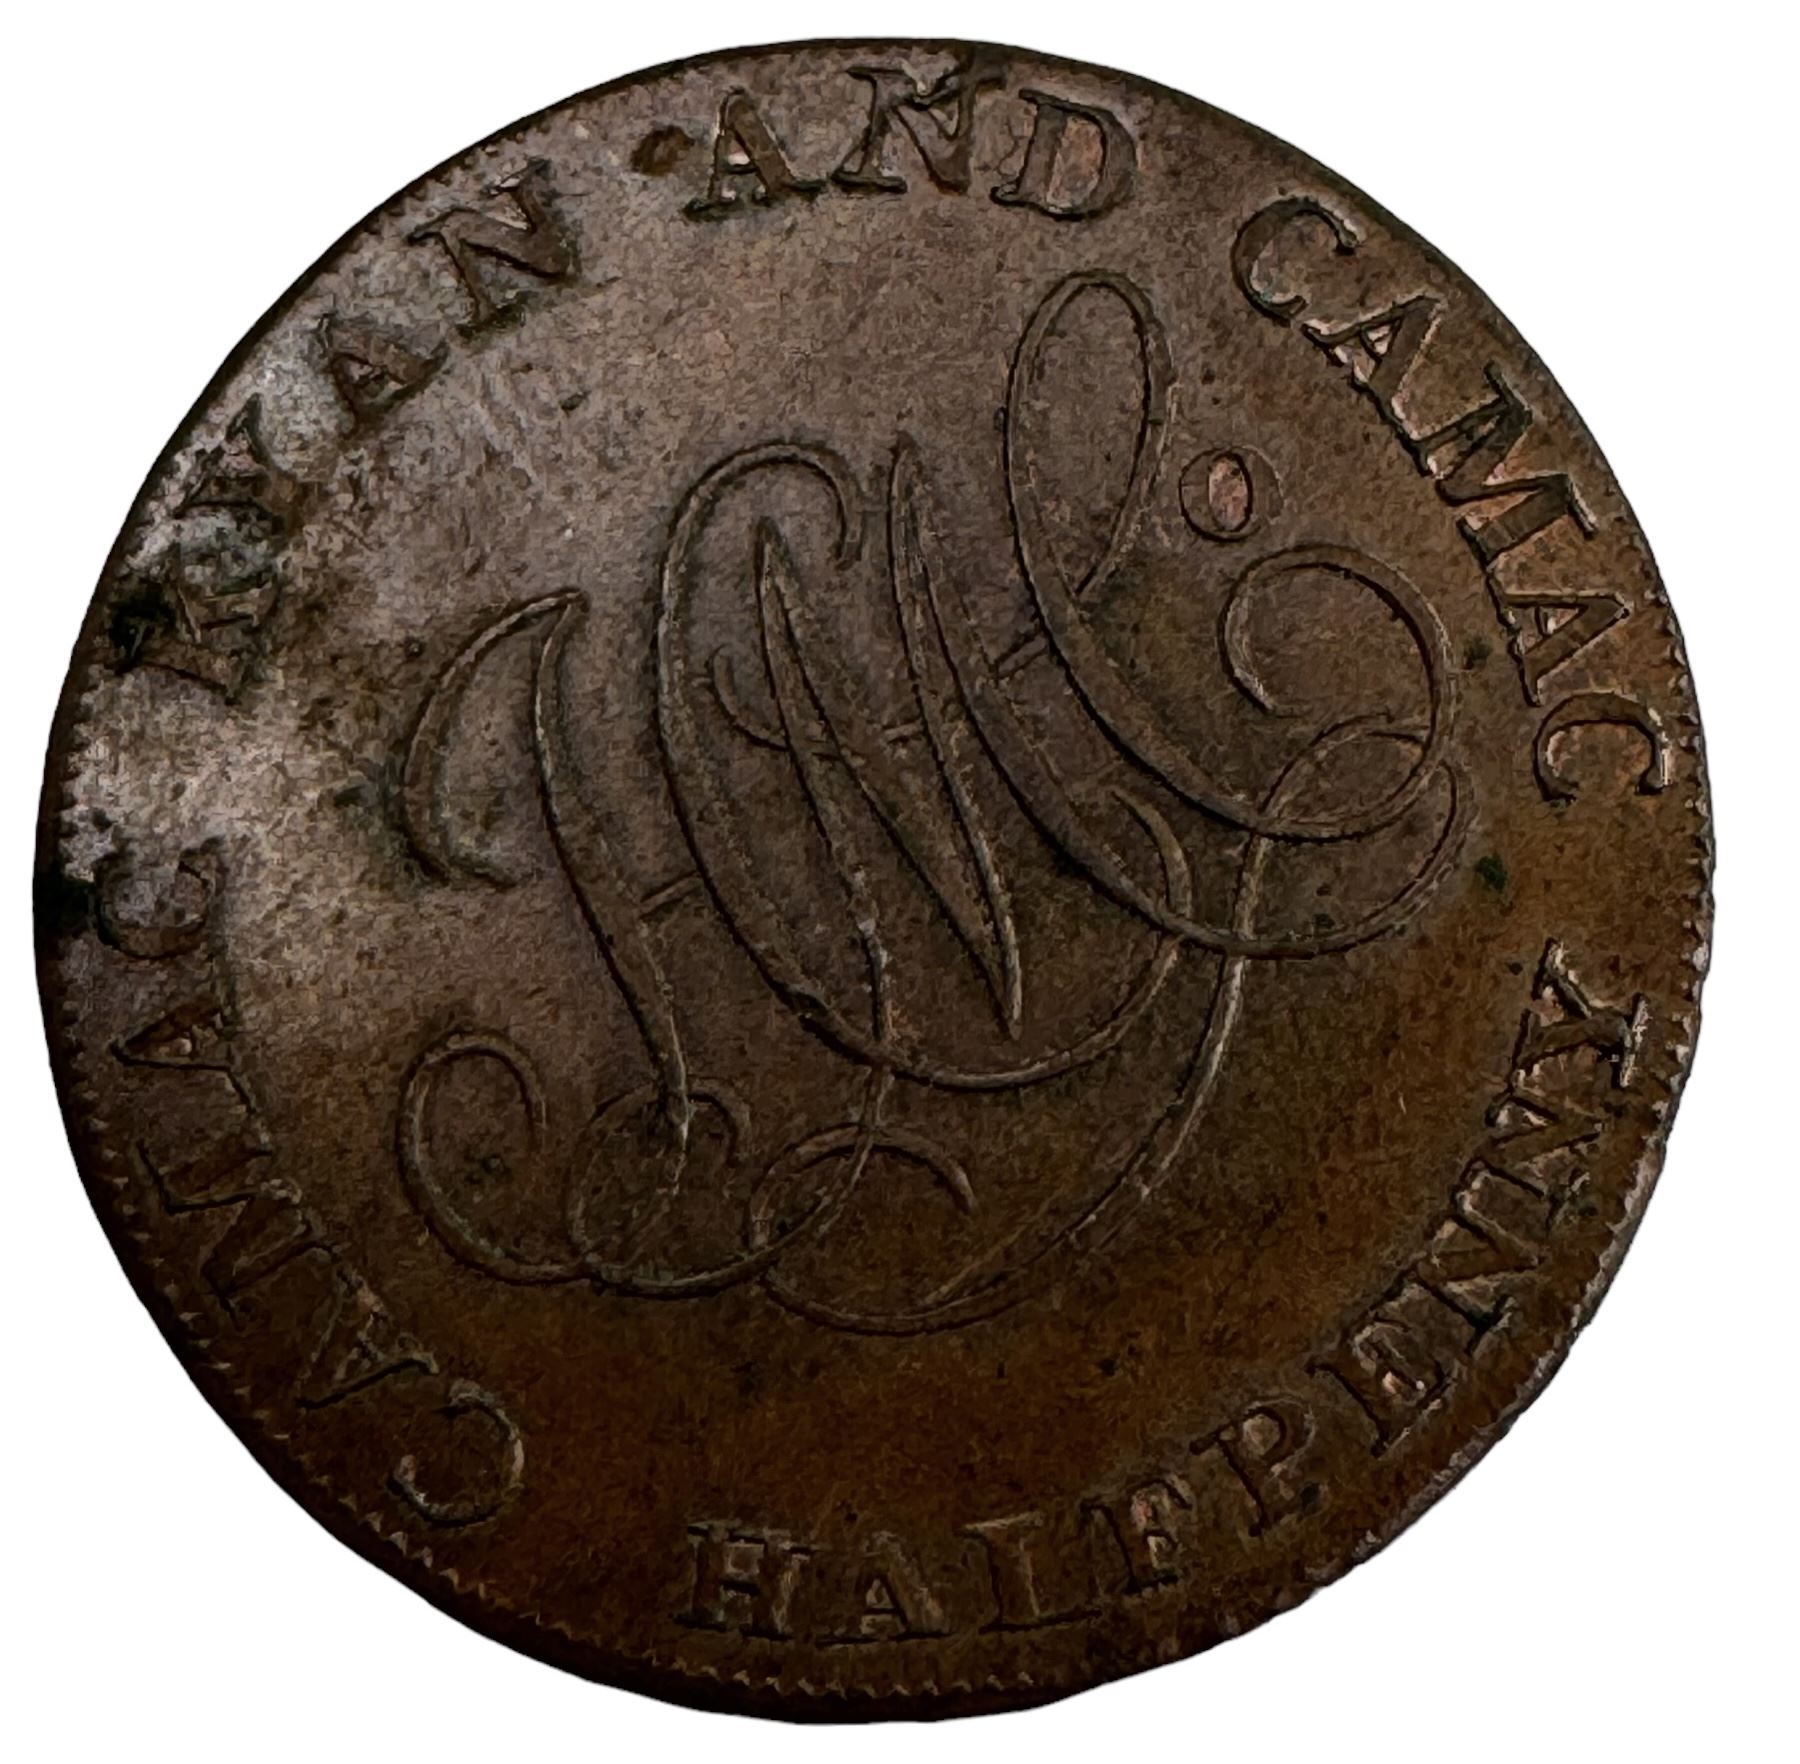 Camac Kyan and Camac Irish 1792 halfpenny token - Image 2 of 7